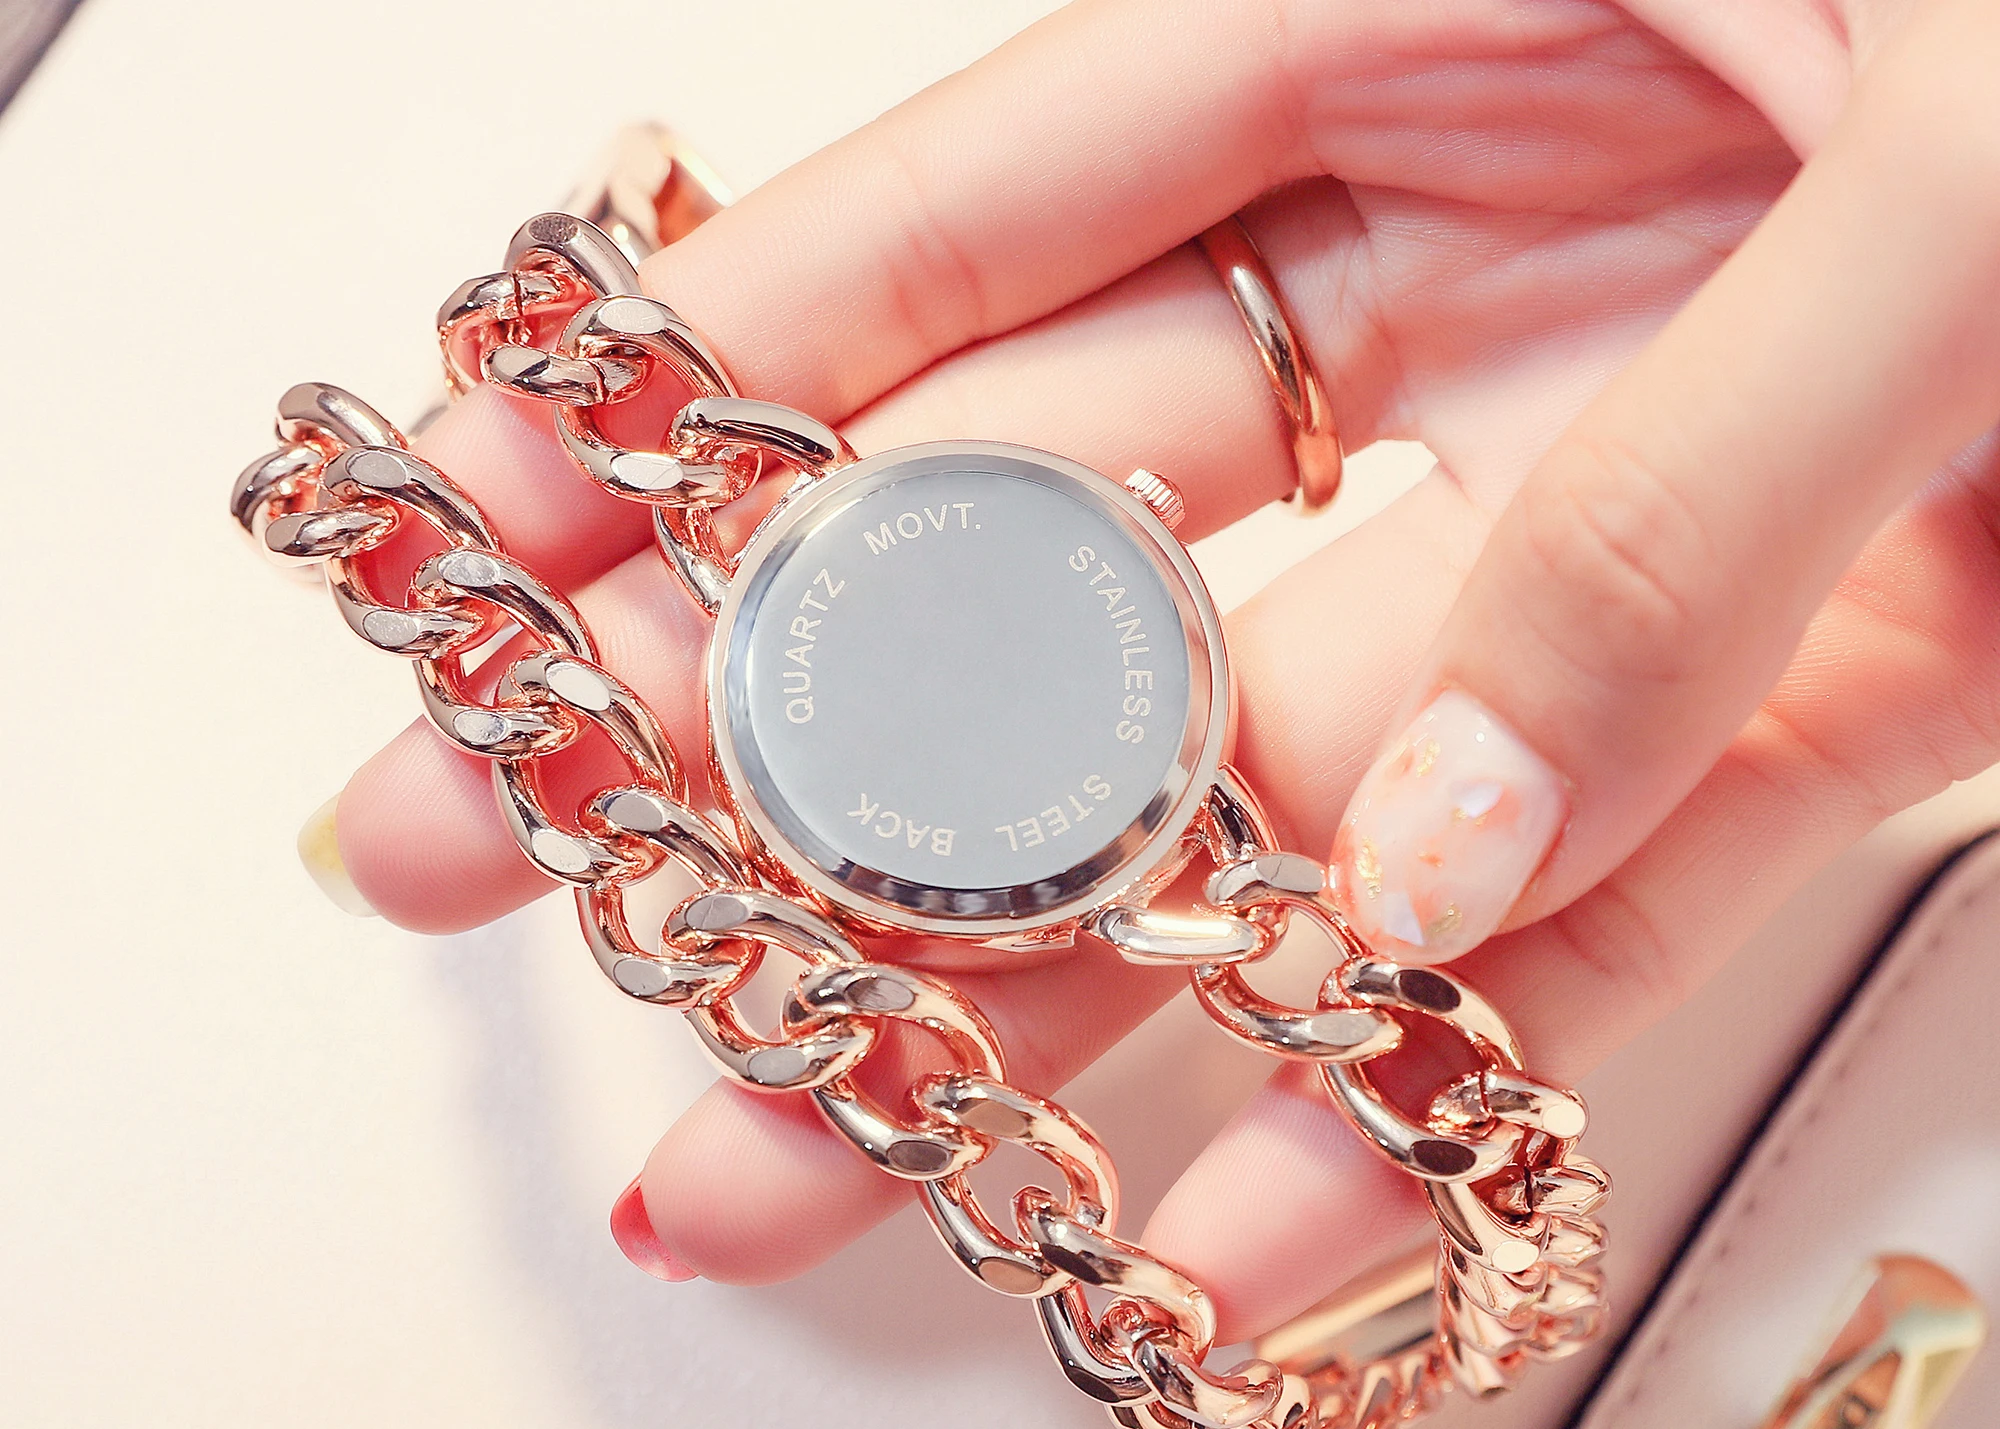 2022 Ladies Gold Fashion Wrist Watches Women Watches Quartz Diamond Stainless Steel Women Wristwatch Bracelet Wtach For Girl enlarge